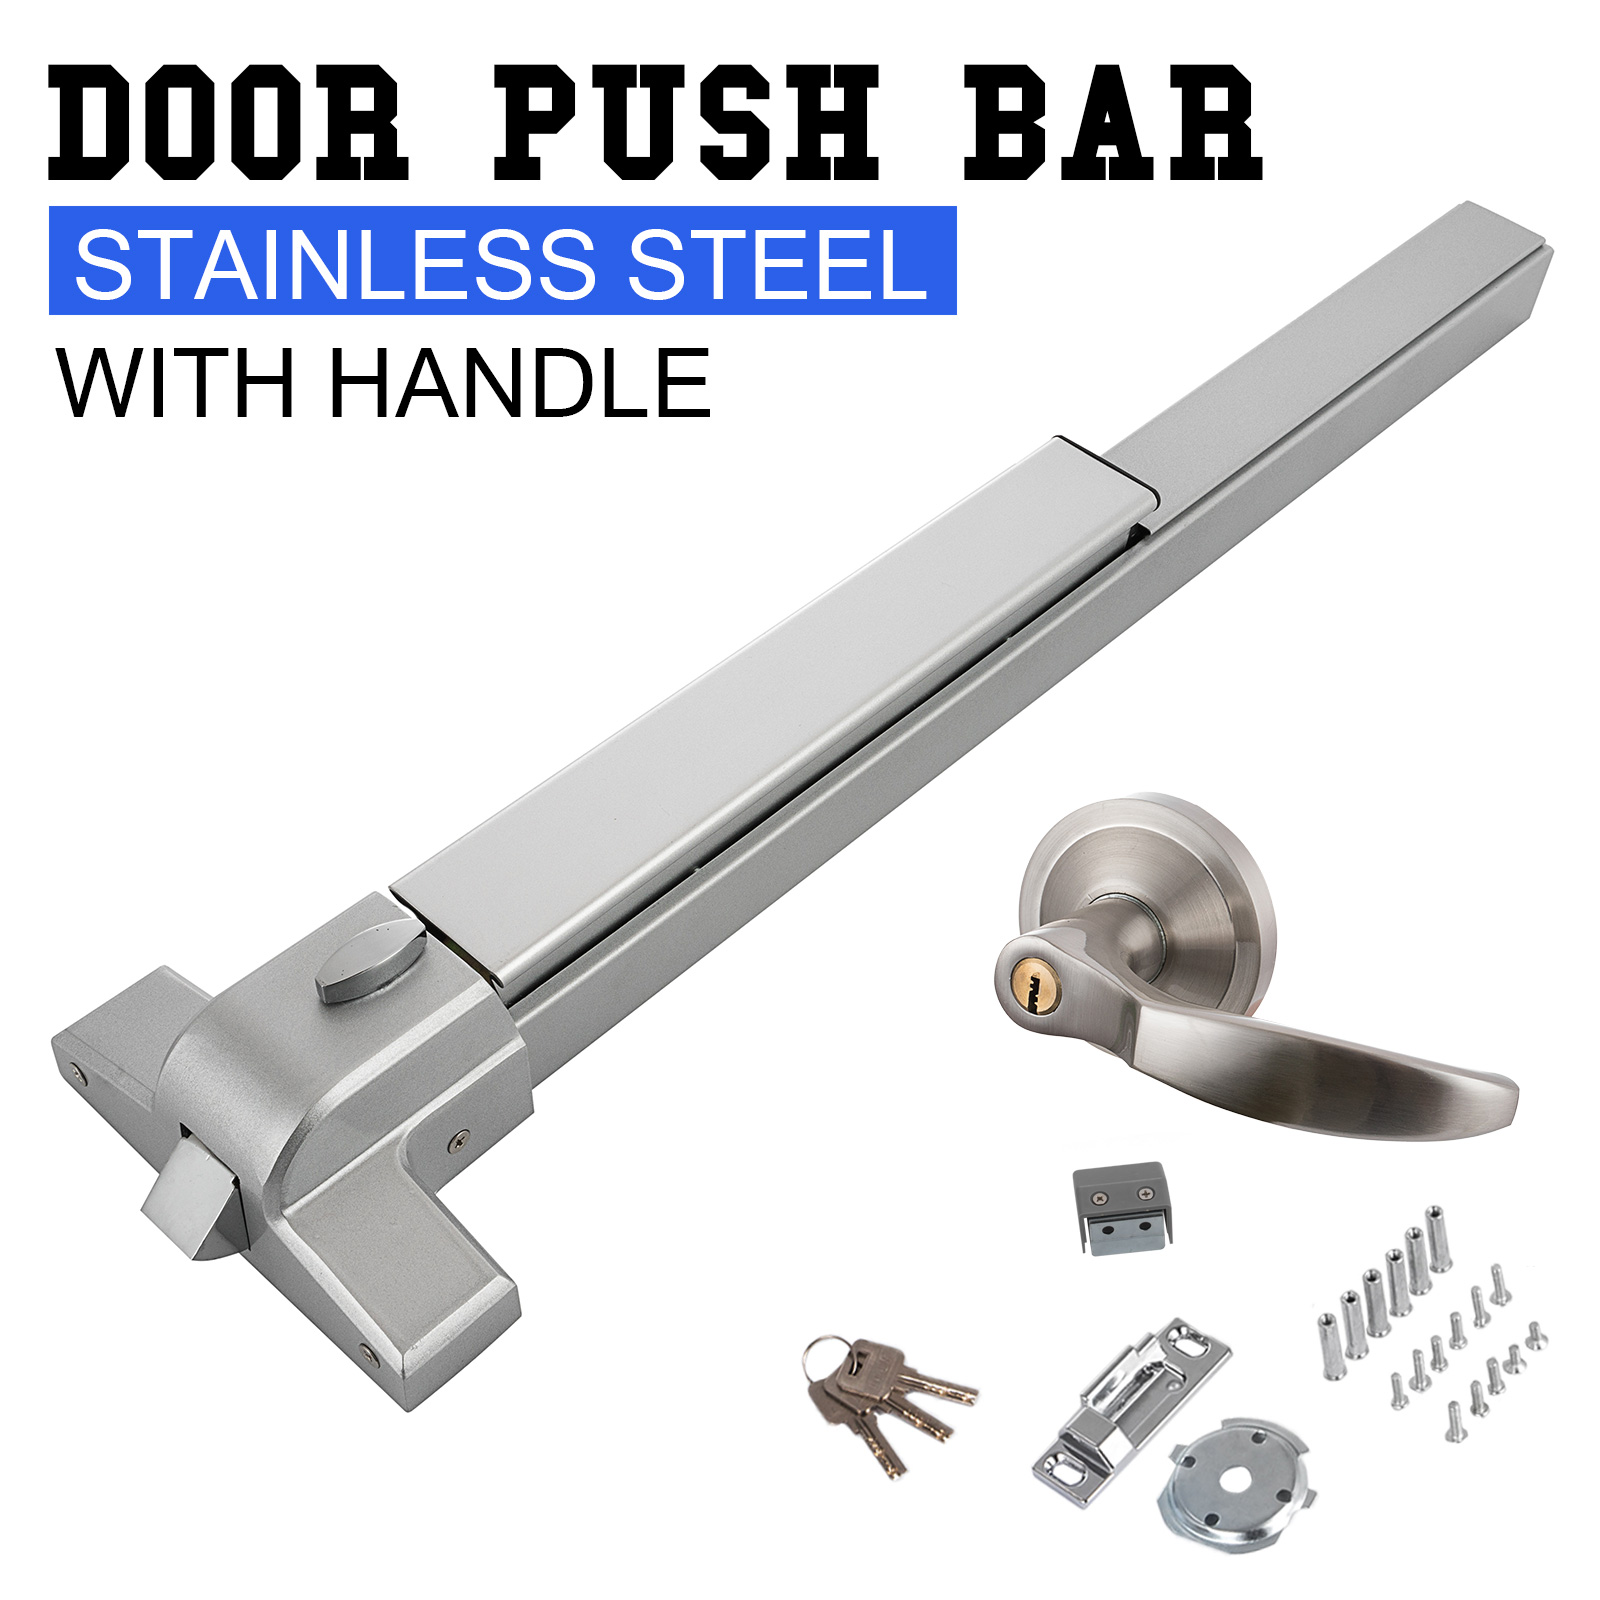 Door Push Bar Panic Exit Device Lock Vertical Emergency Hardware Aluminum Handle 886373406393 | eBay How To Lock A Push Bar Door Without Key